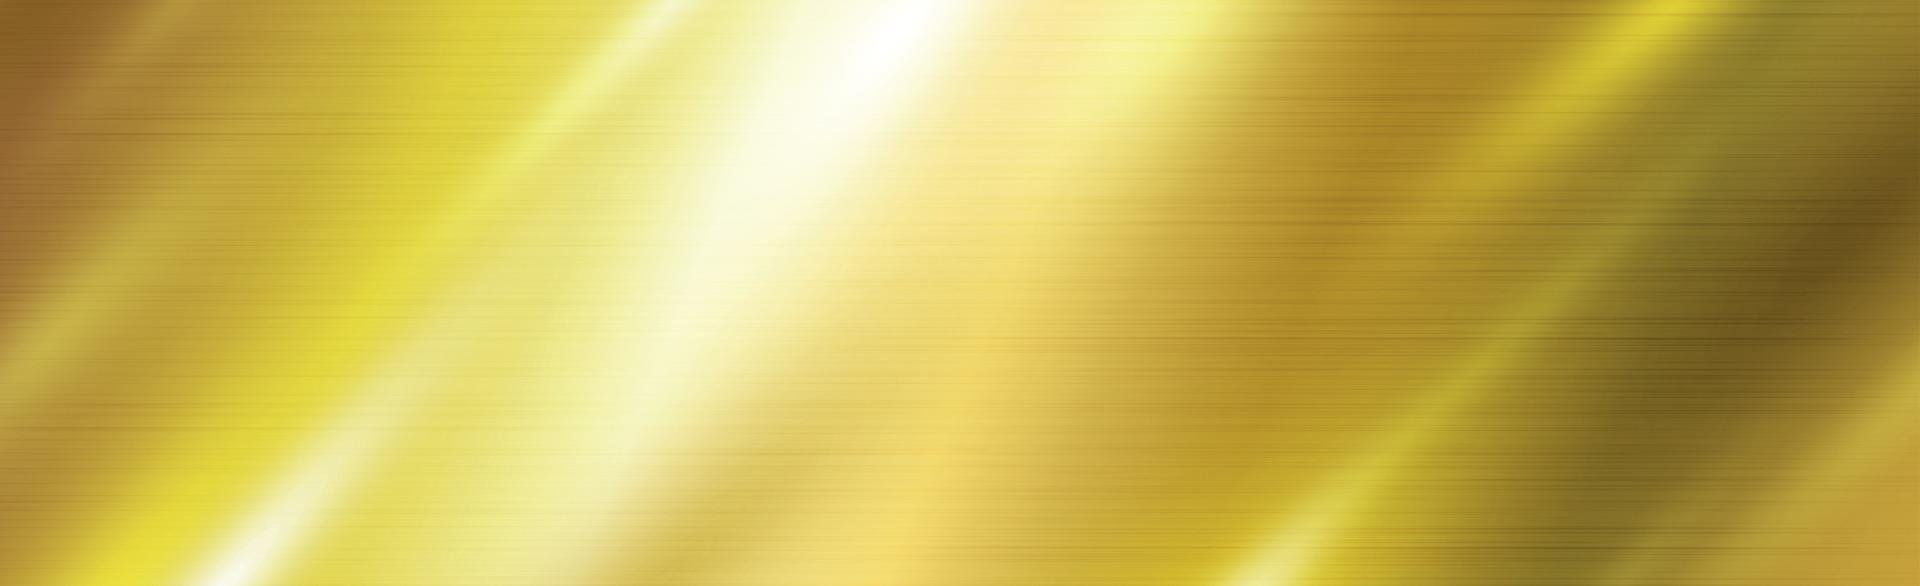 textura panorâmica de ouro com glitter - vetor